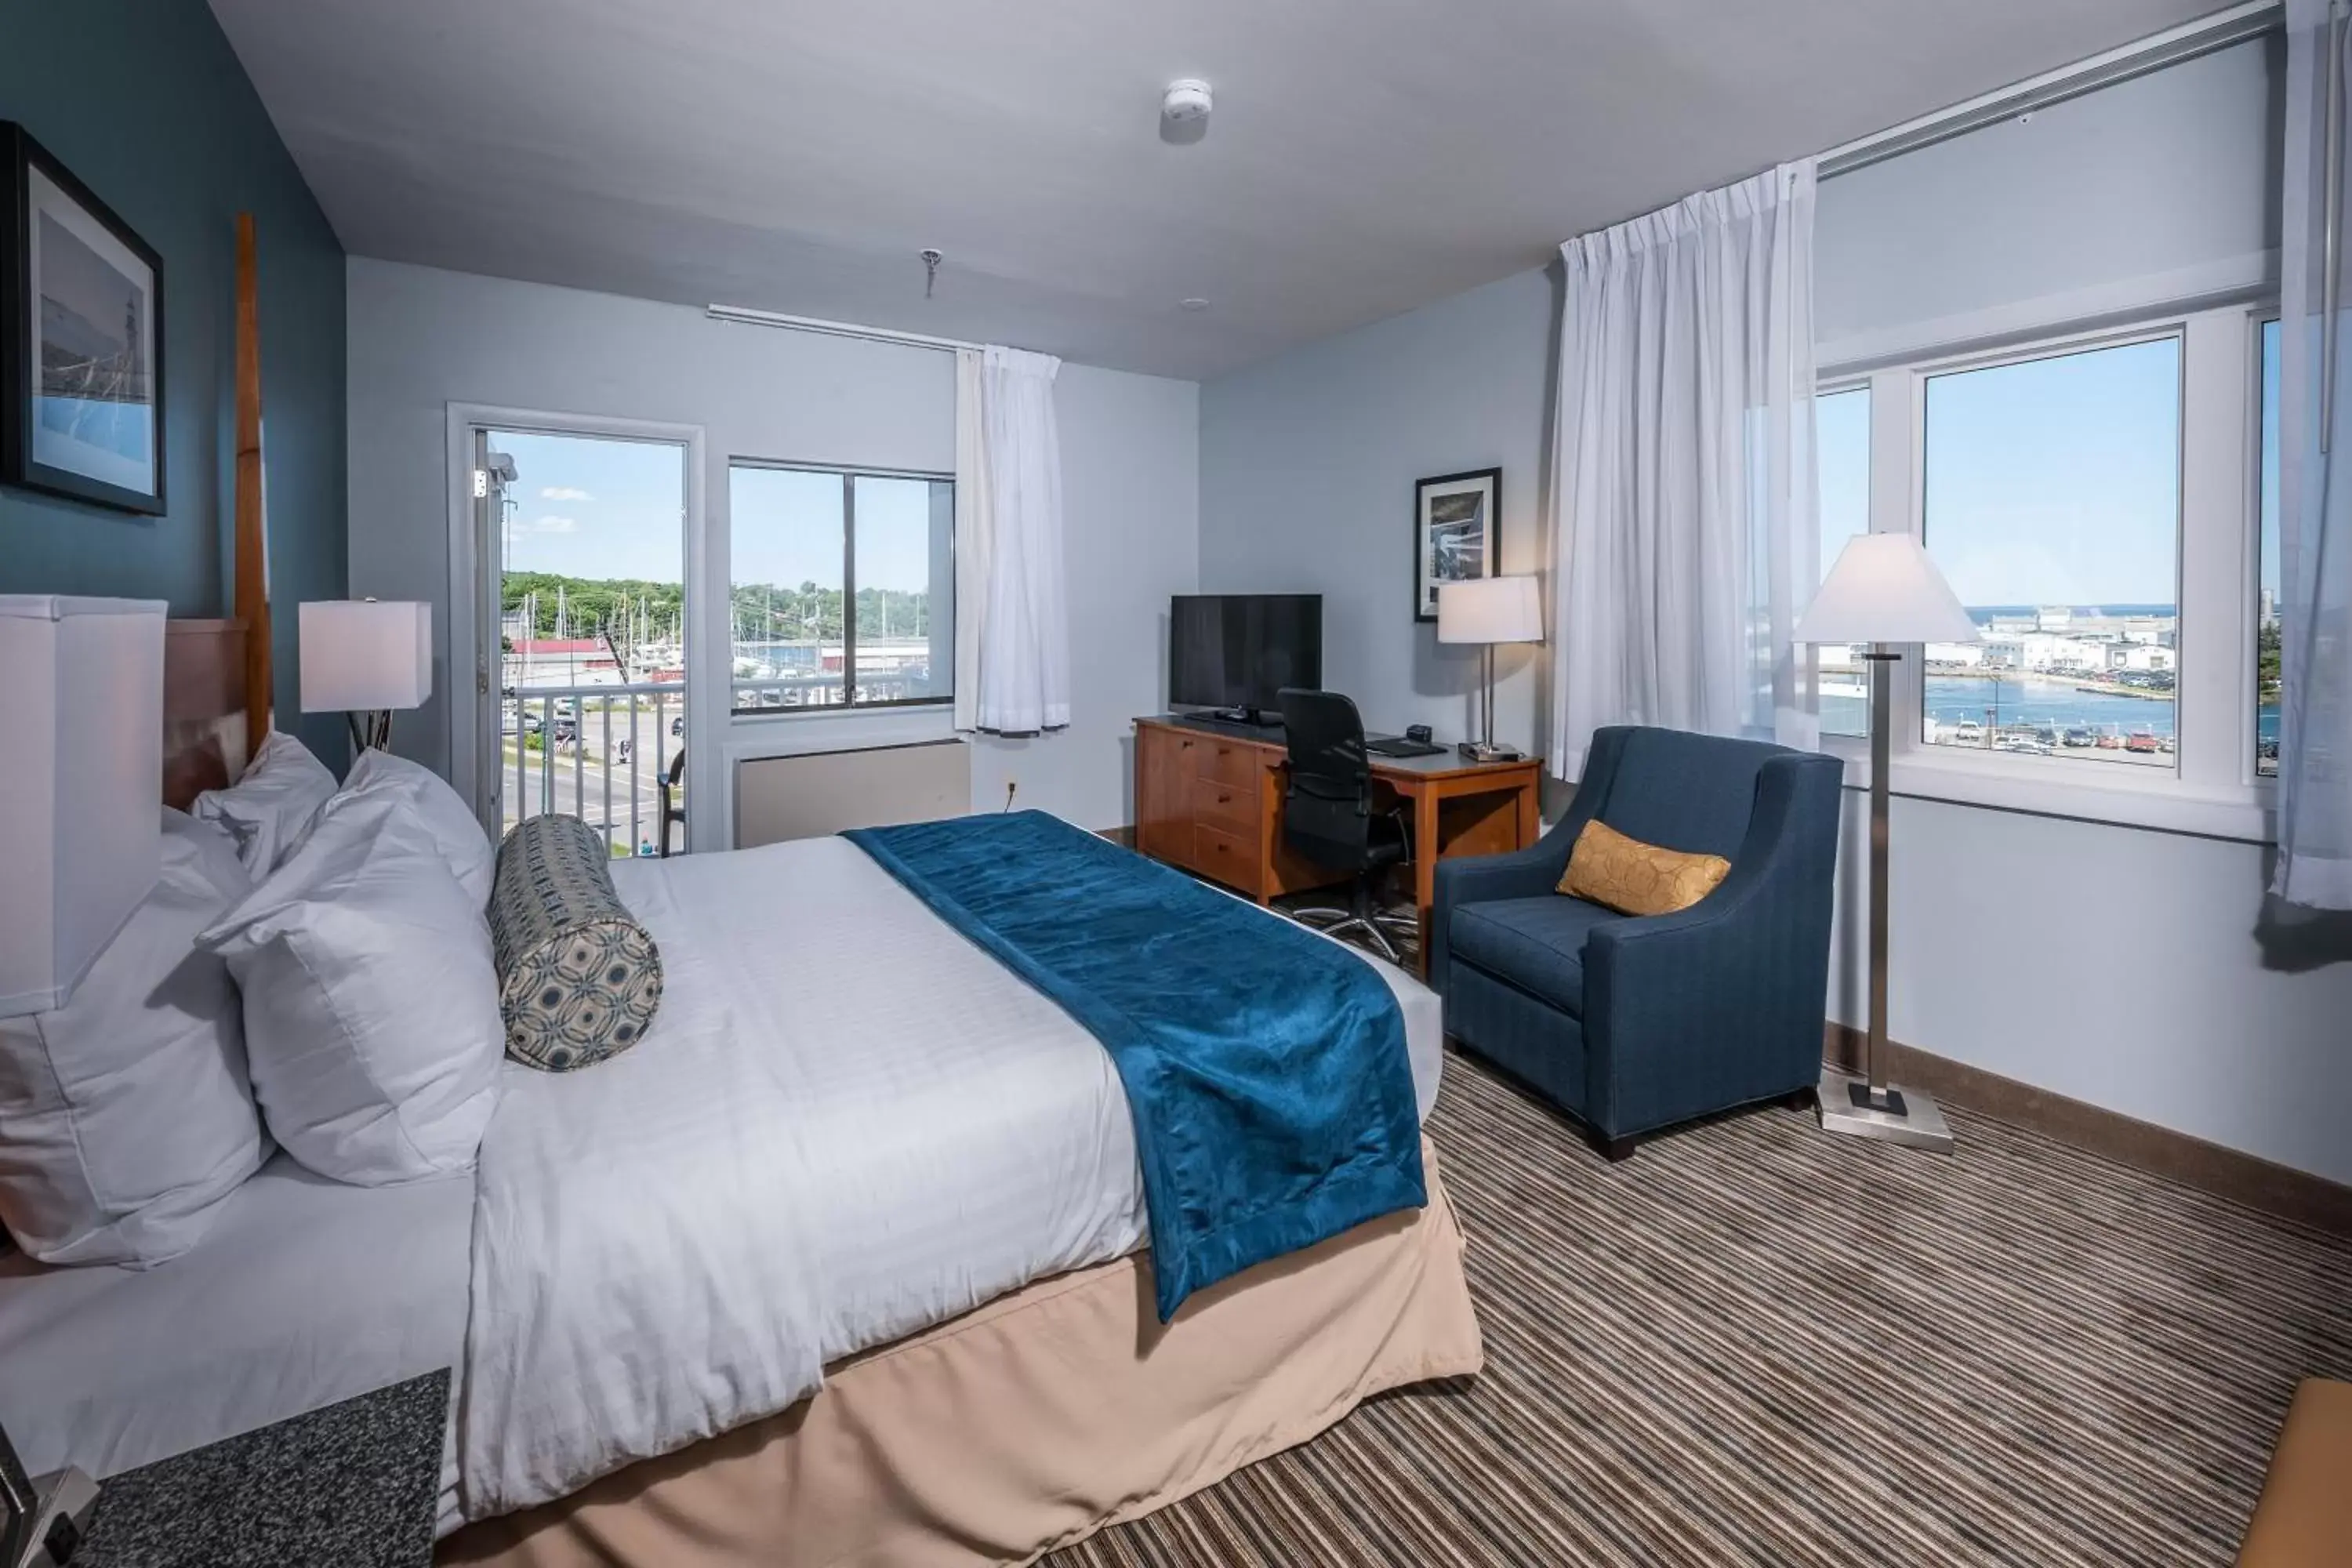 Bedroom in Rockland Harbor Hotel